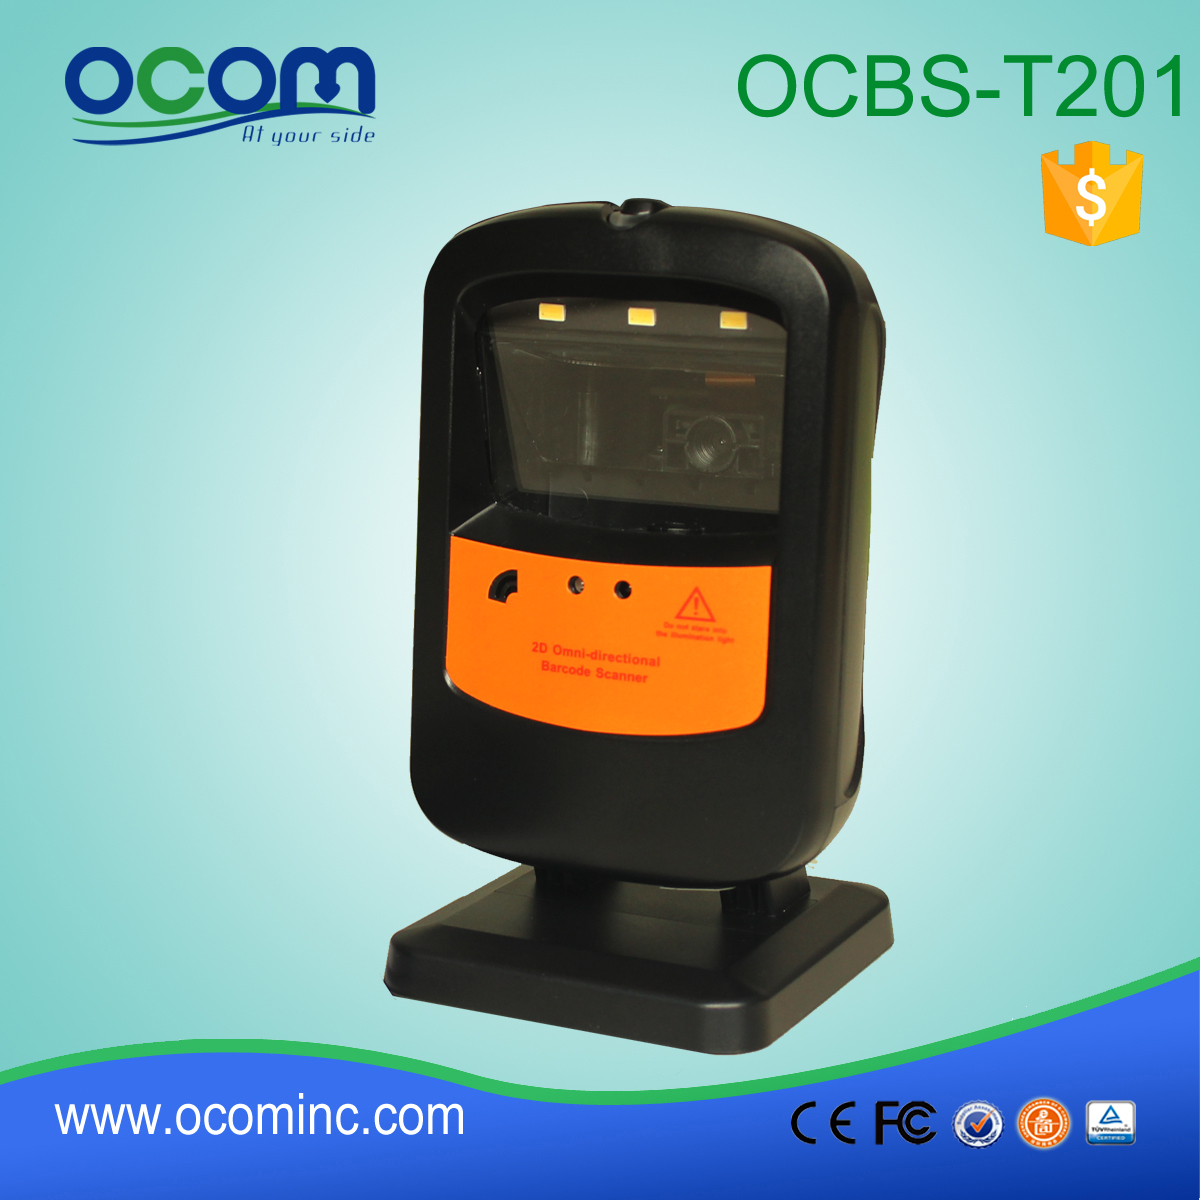 OCBs-T201: σούπερ μάρκετ μονάδα σαρωτή γραμμωτού κώδικα, barcode scanner Mini USB